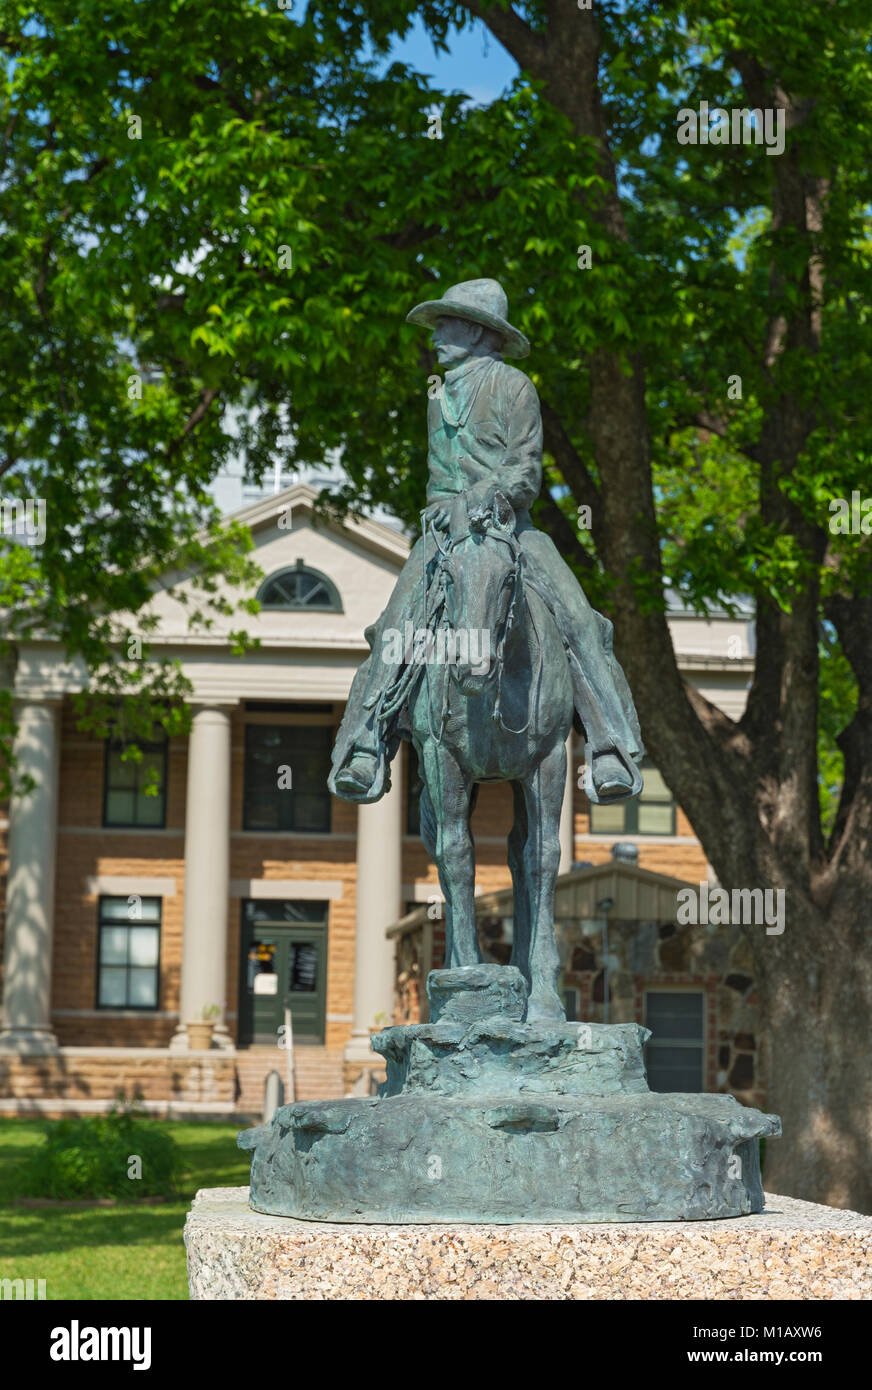 Texas Hill Country, Mason, Courthouse Square, la statua dedicata a i cattlemen, cowboy e drovers di Mason County Foto Stock